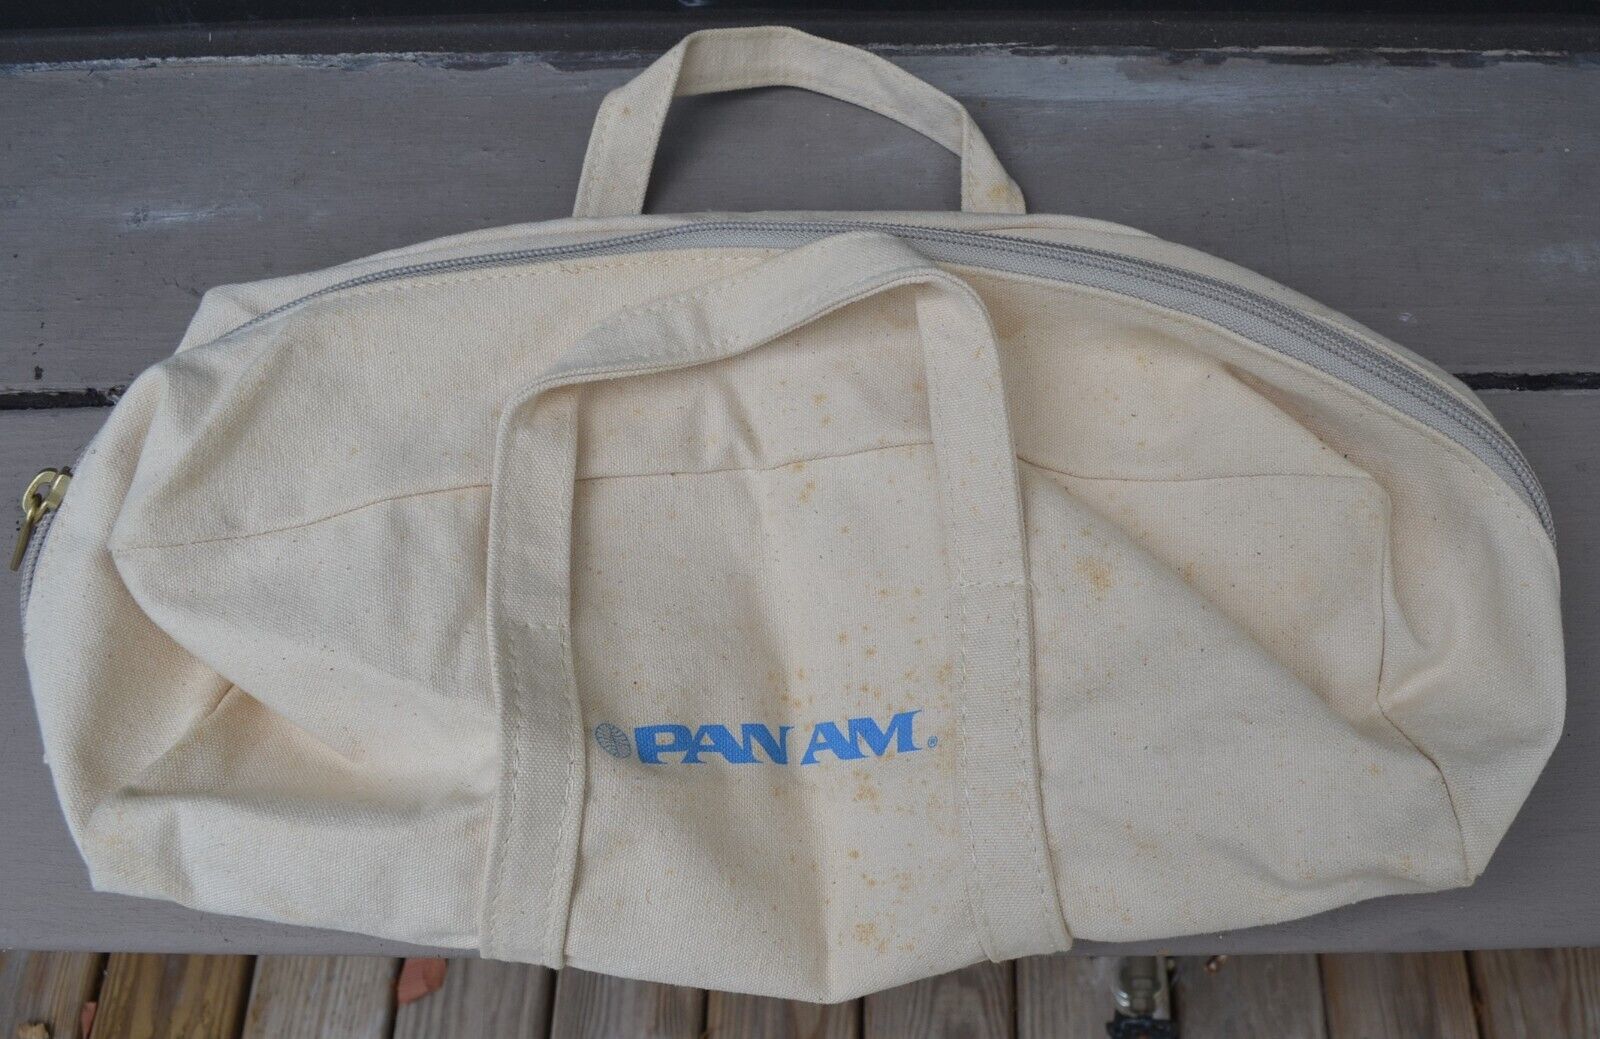 Pan Am Maintenance canvas bag